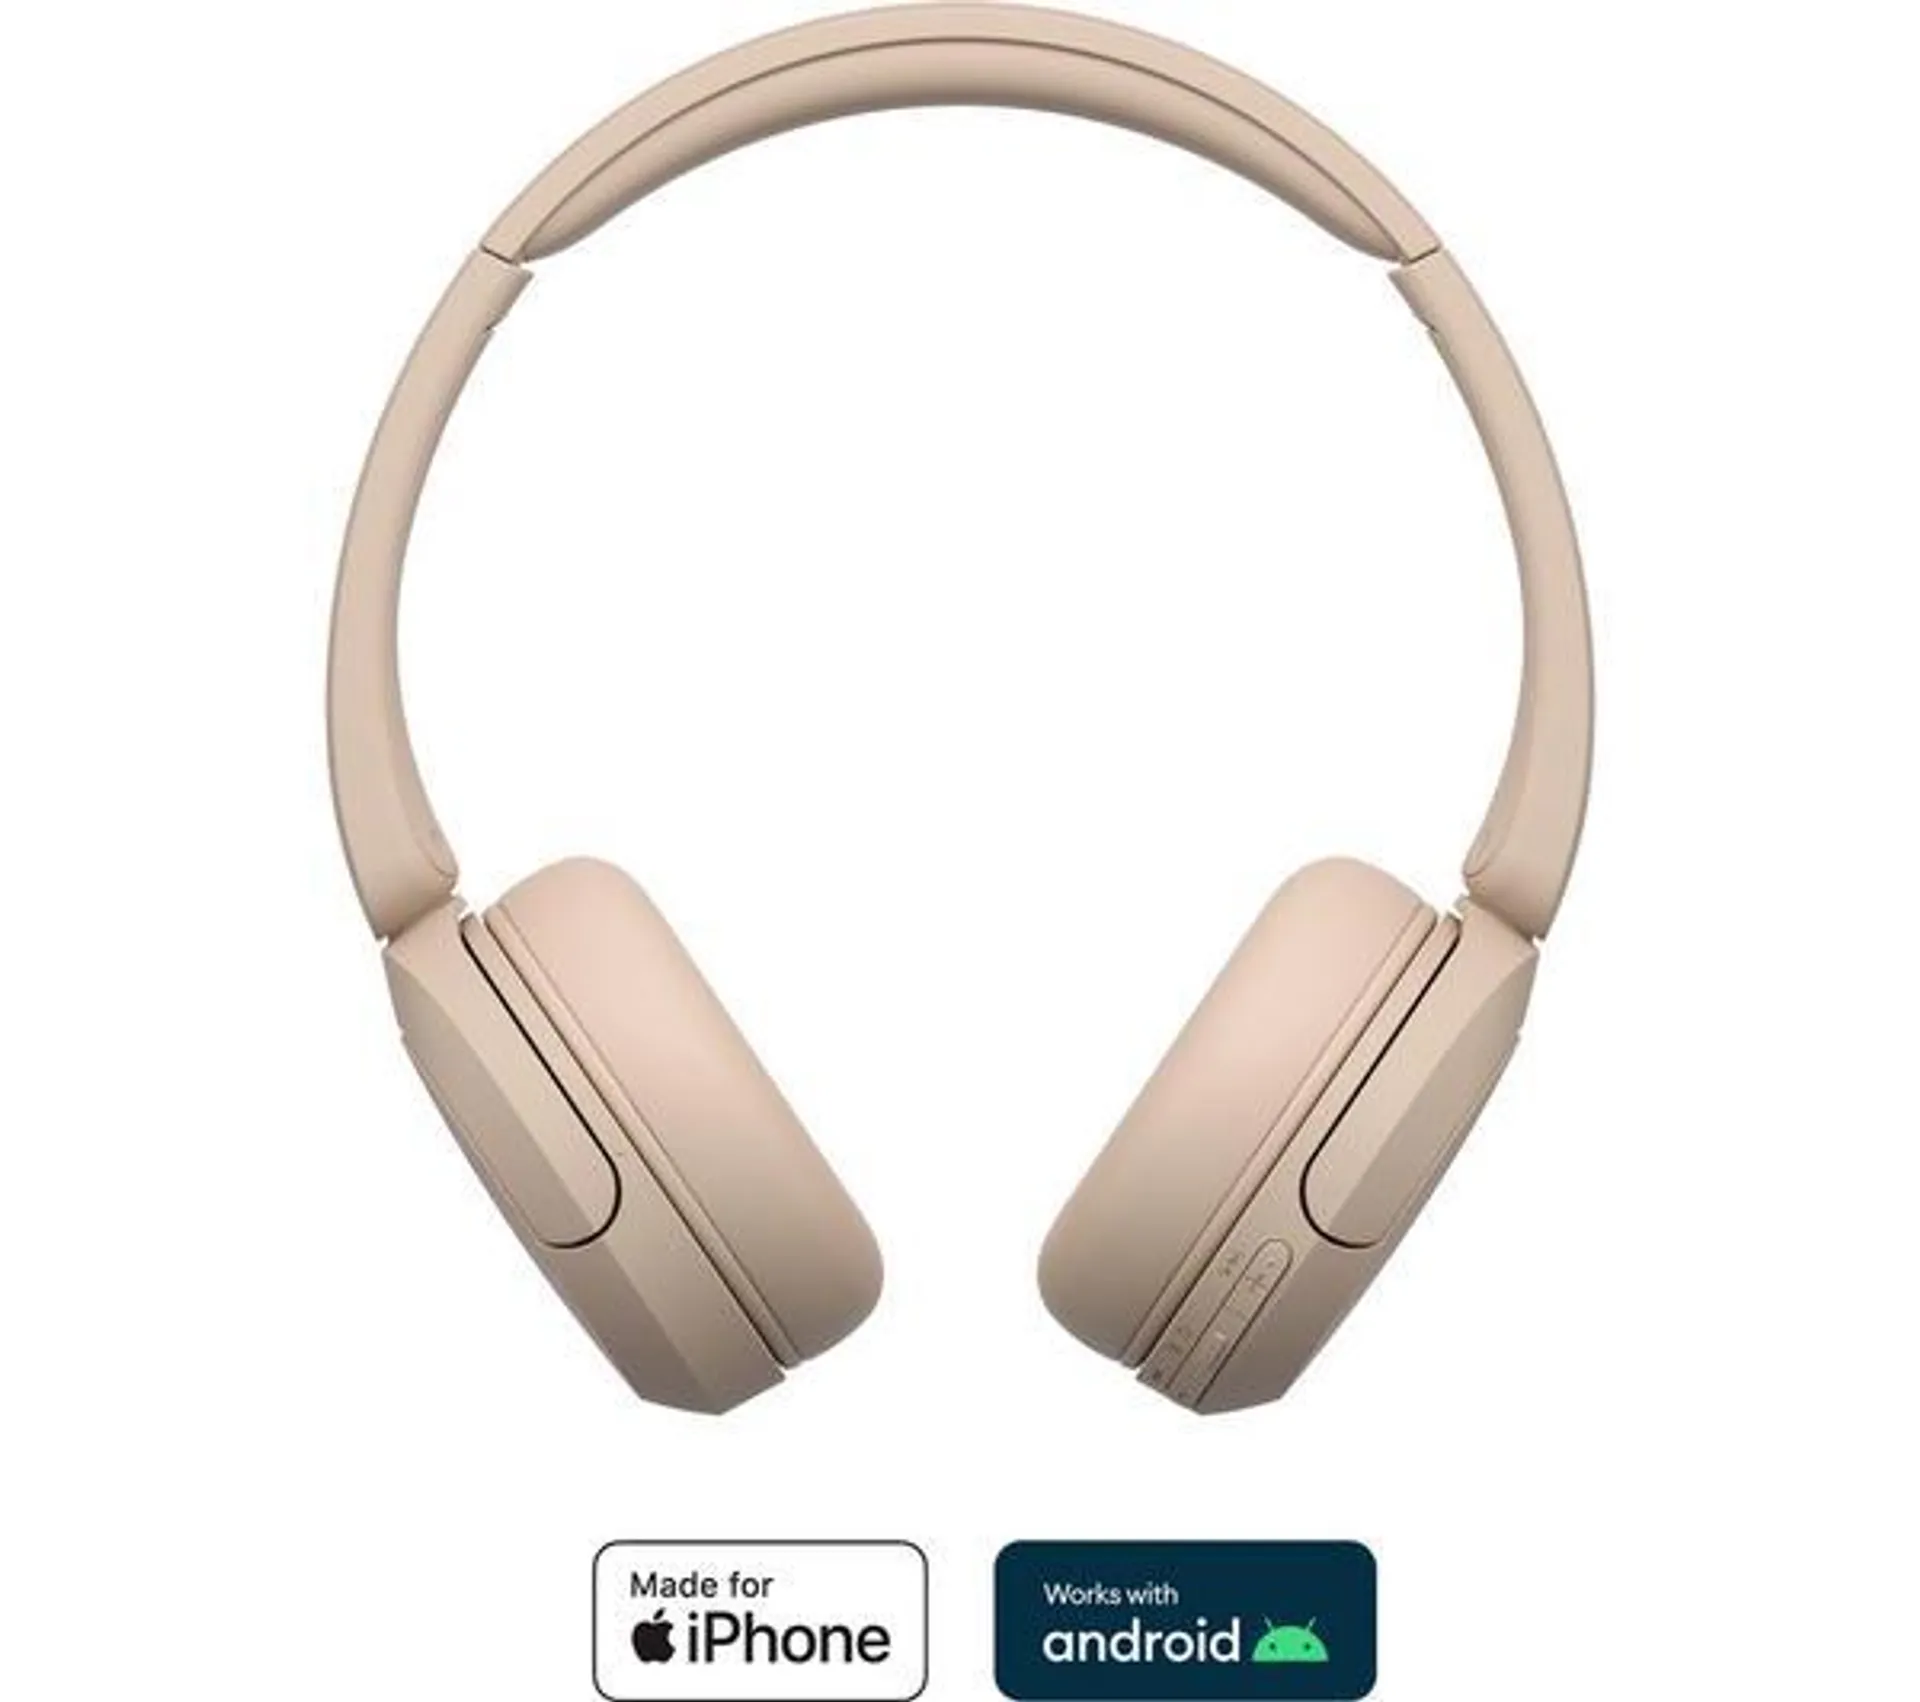 SONY WH-CH520C Wireless Bluetooth Headphones - Beige